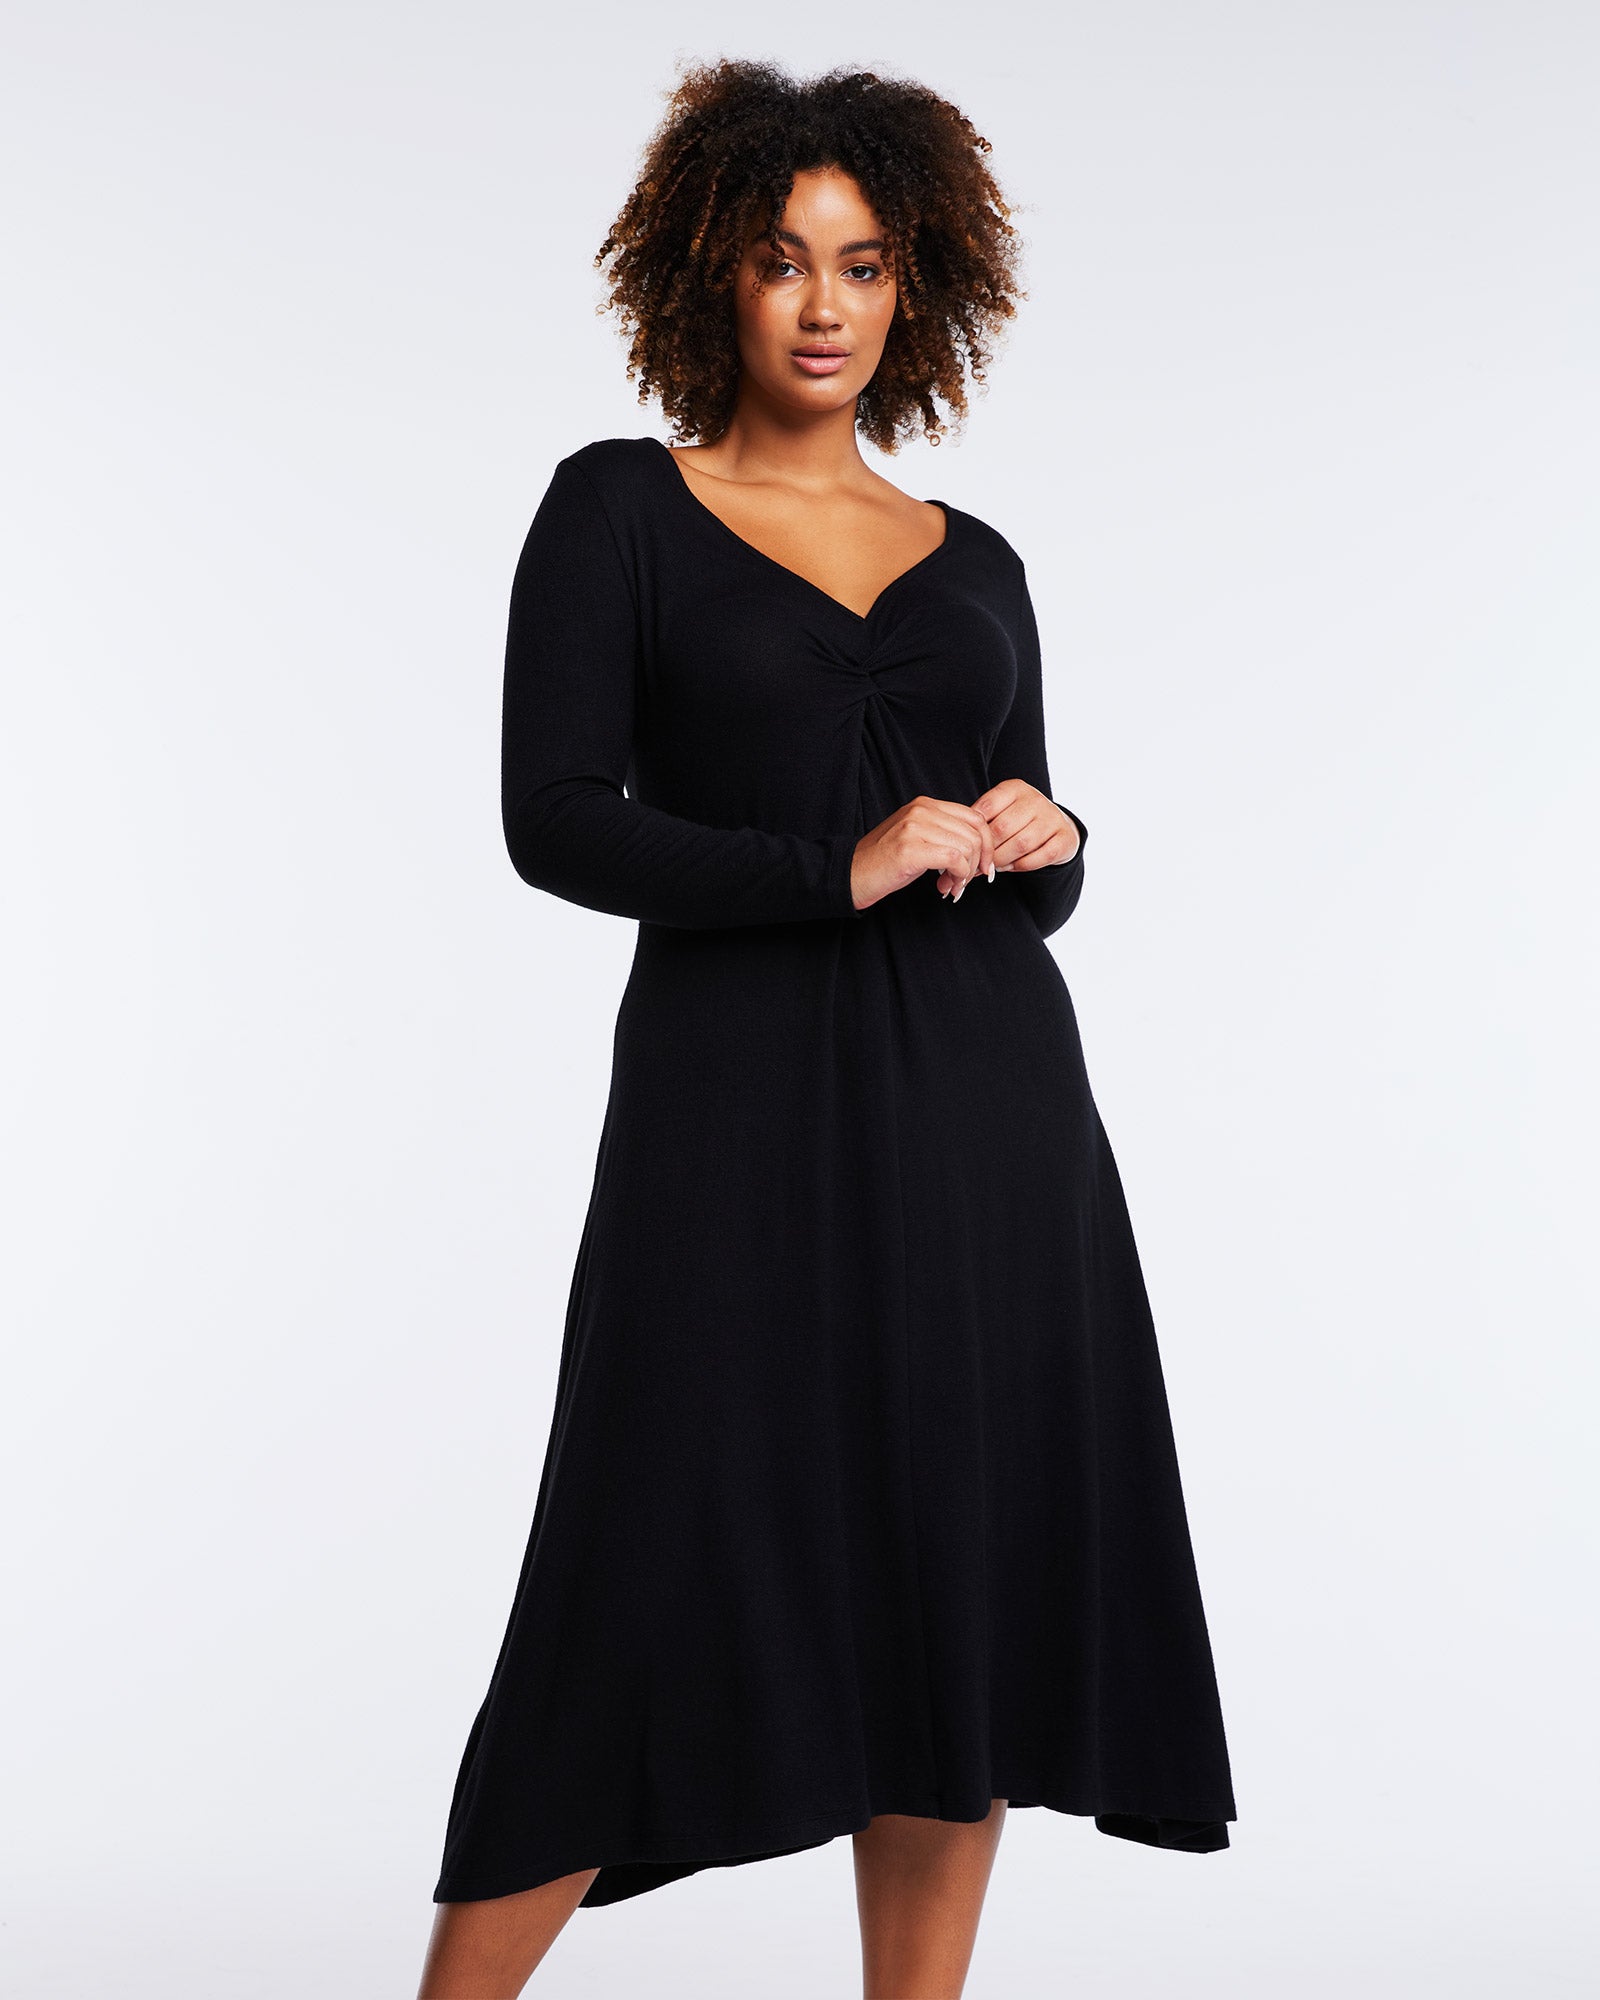 A versatile plus-sized woman wearing a Florentine Black Long Sleeve Midi Knit Dress.